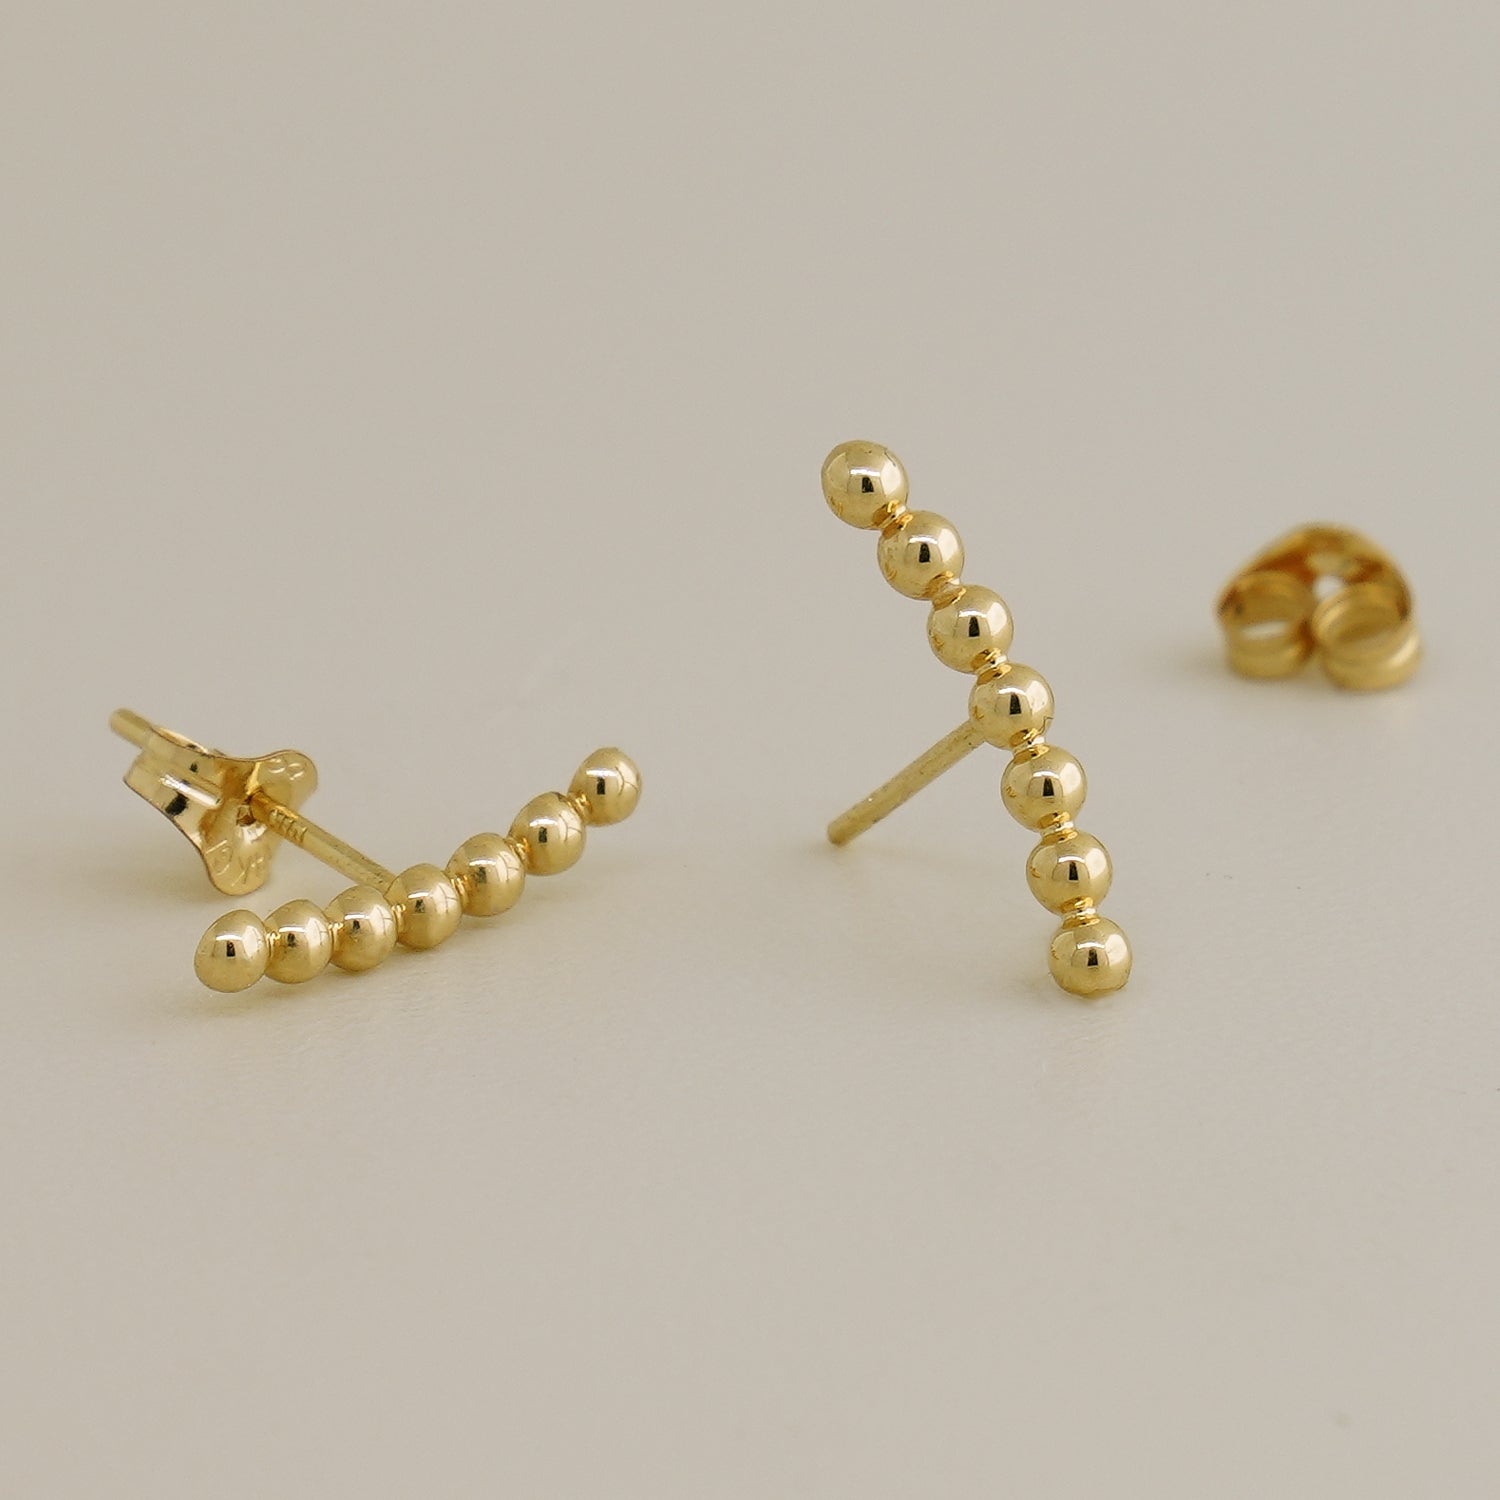 Buy 14K Solid Gold Climber Stud Earrings 